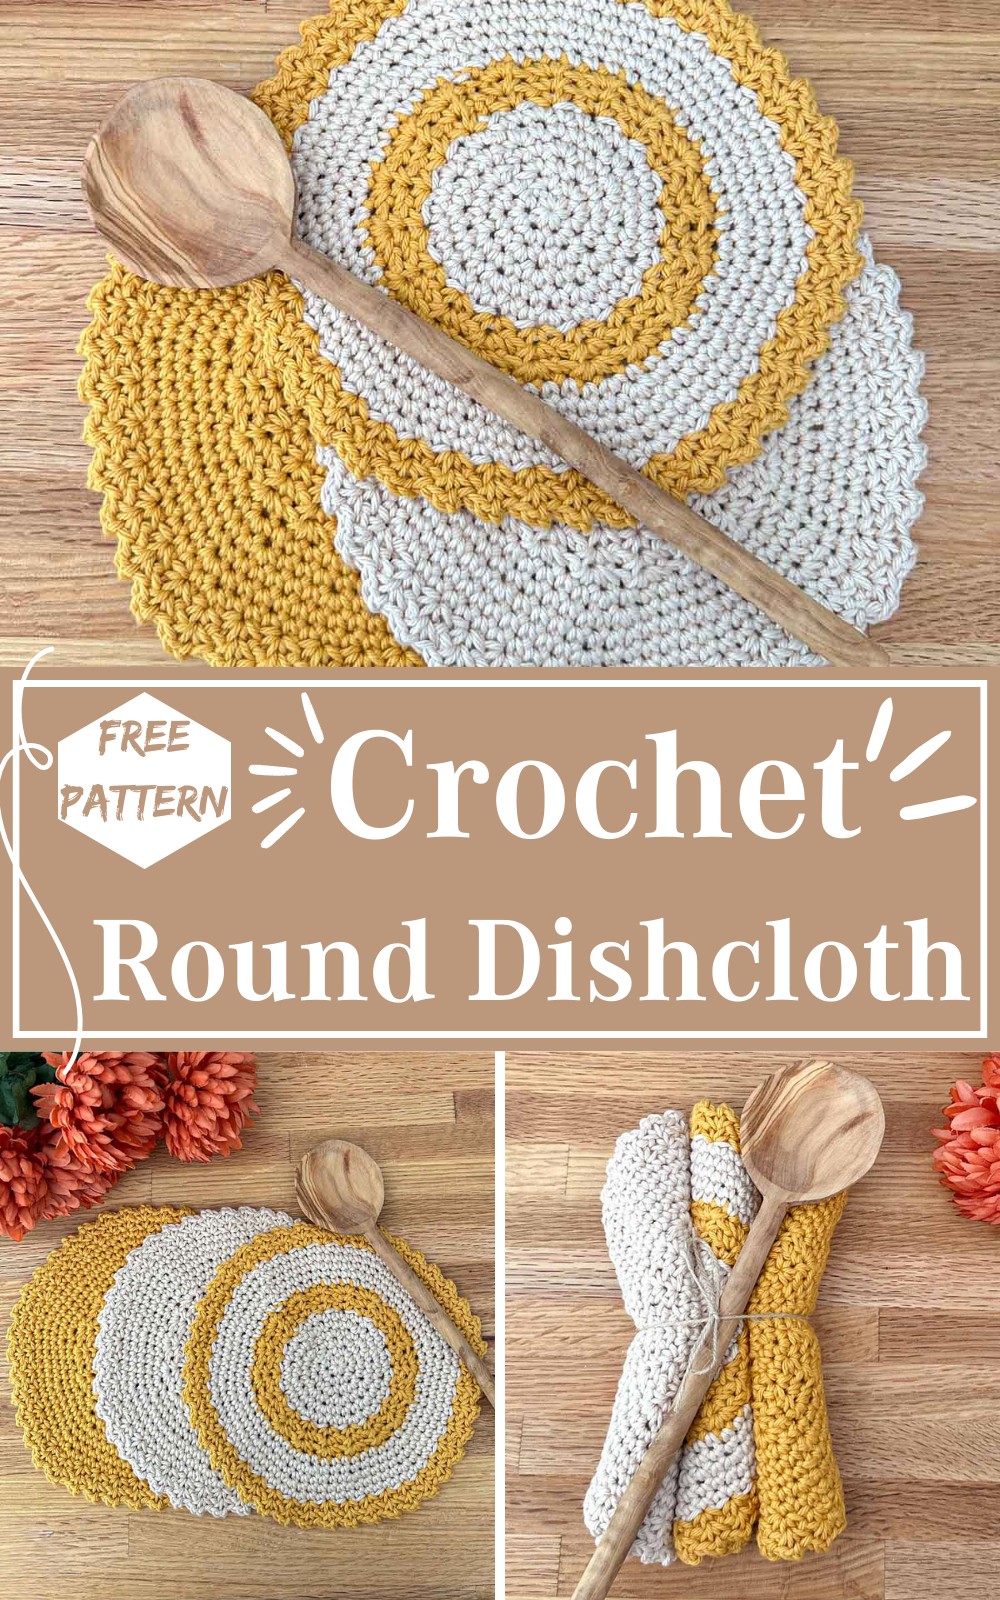 Round Dishcloth